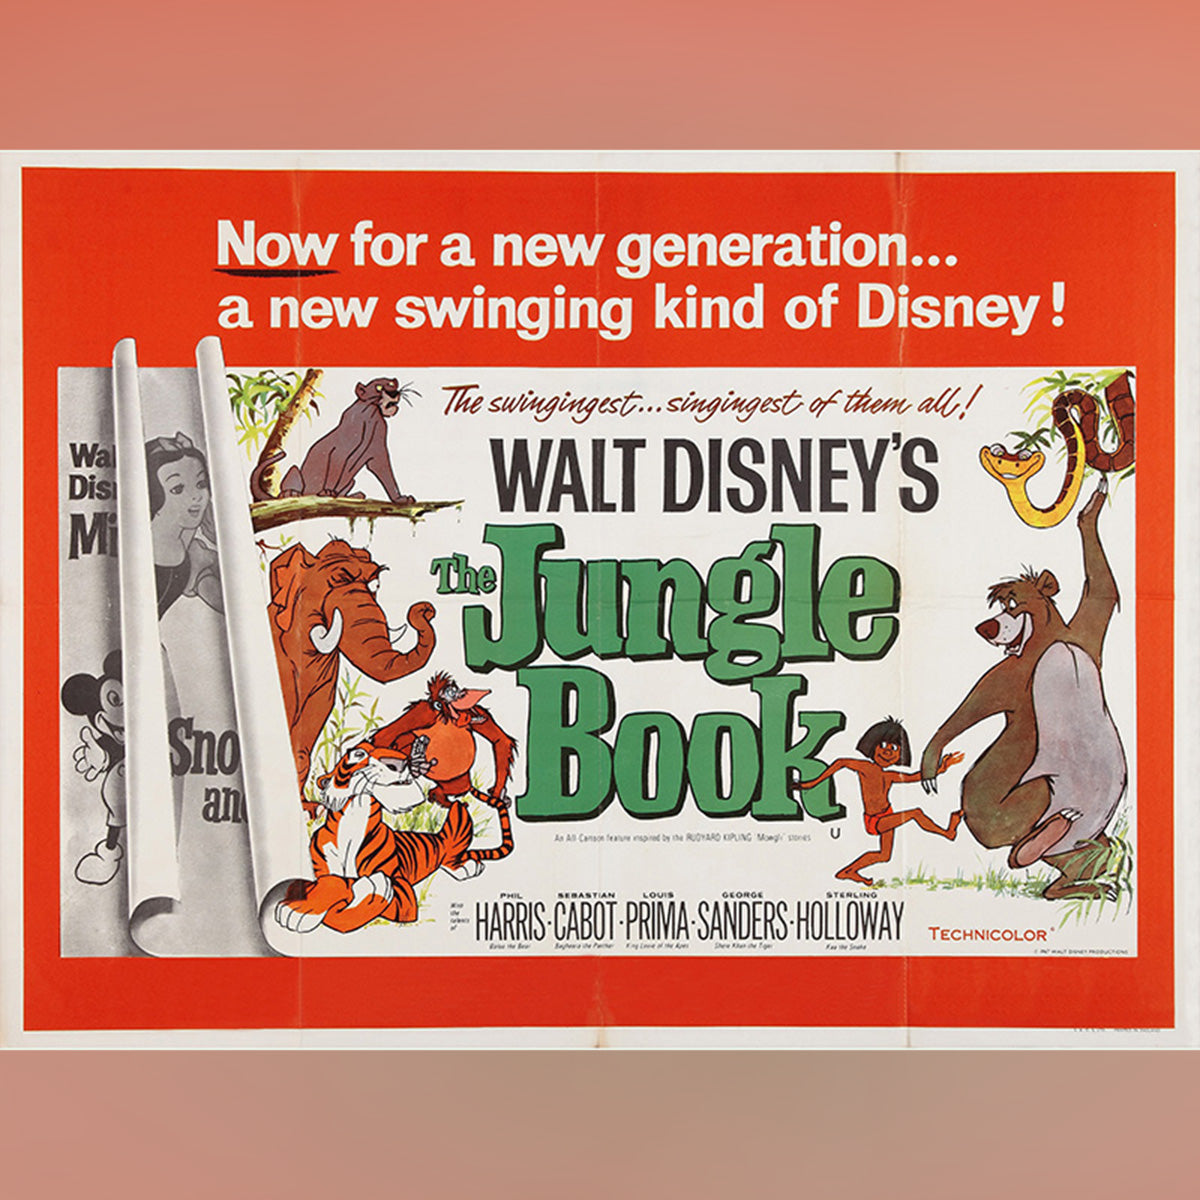 Original Movie Poster of Jungle Book, The (1967)